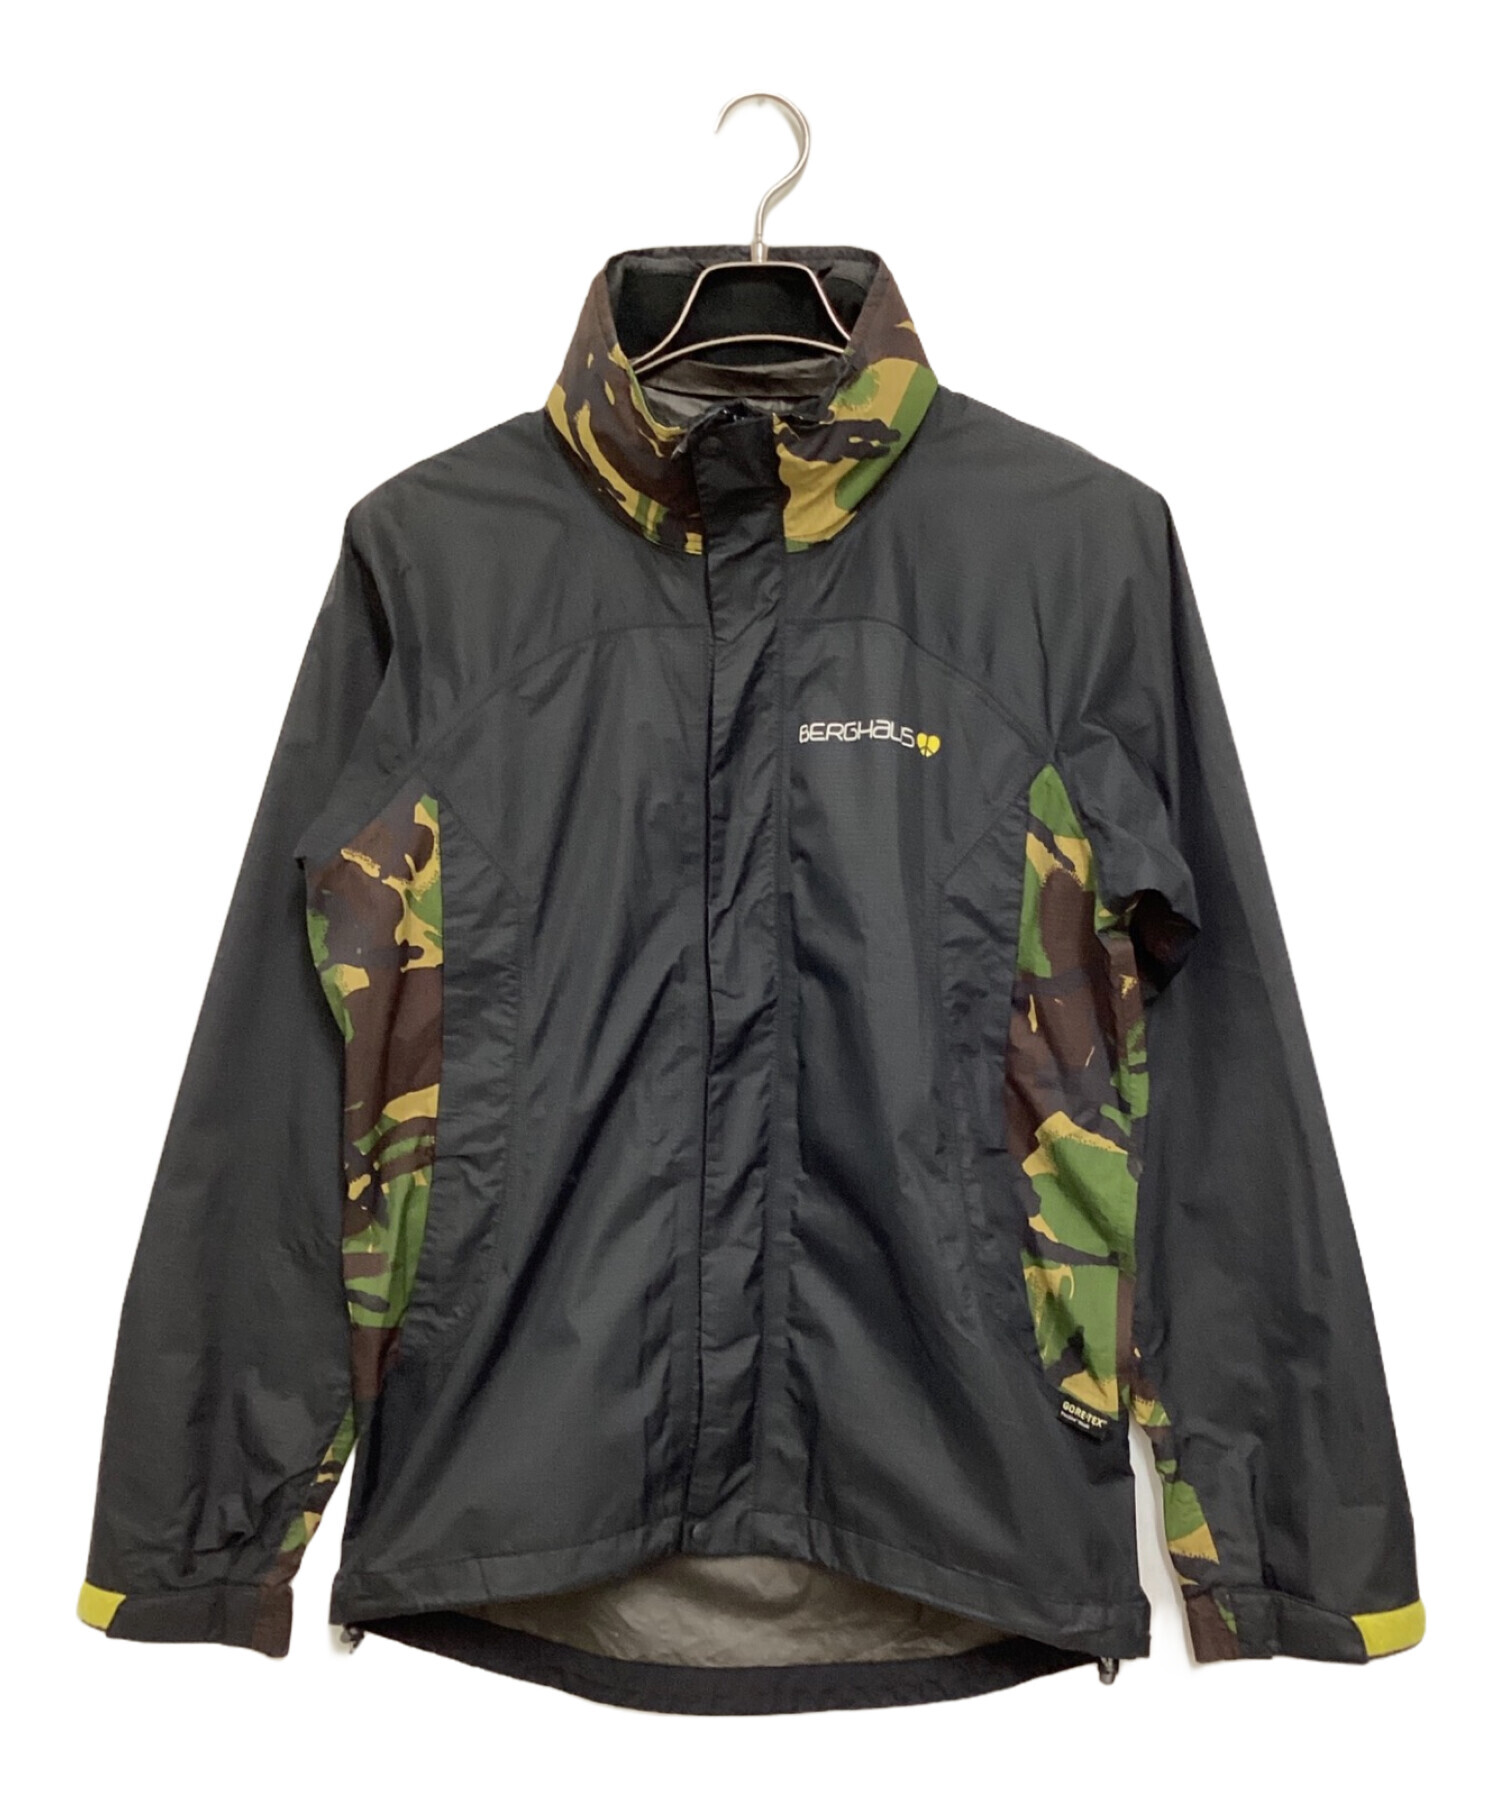 GRIFFIN (グリフィン) griffin m paclite jacket(グリフィン パックライト ジャケット) ブラック サイズ:S